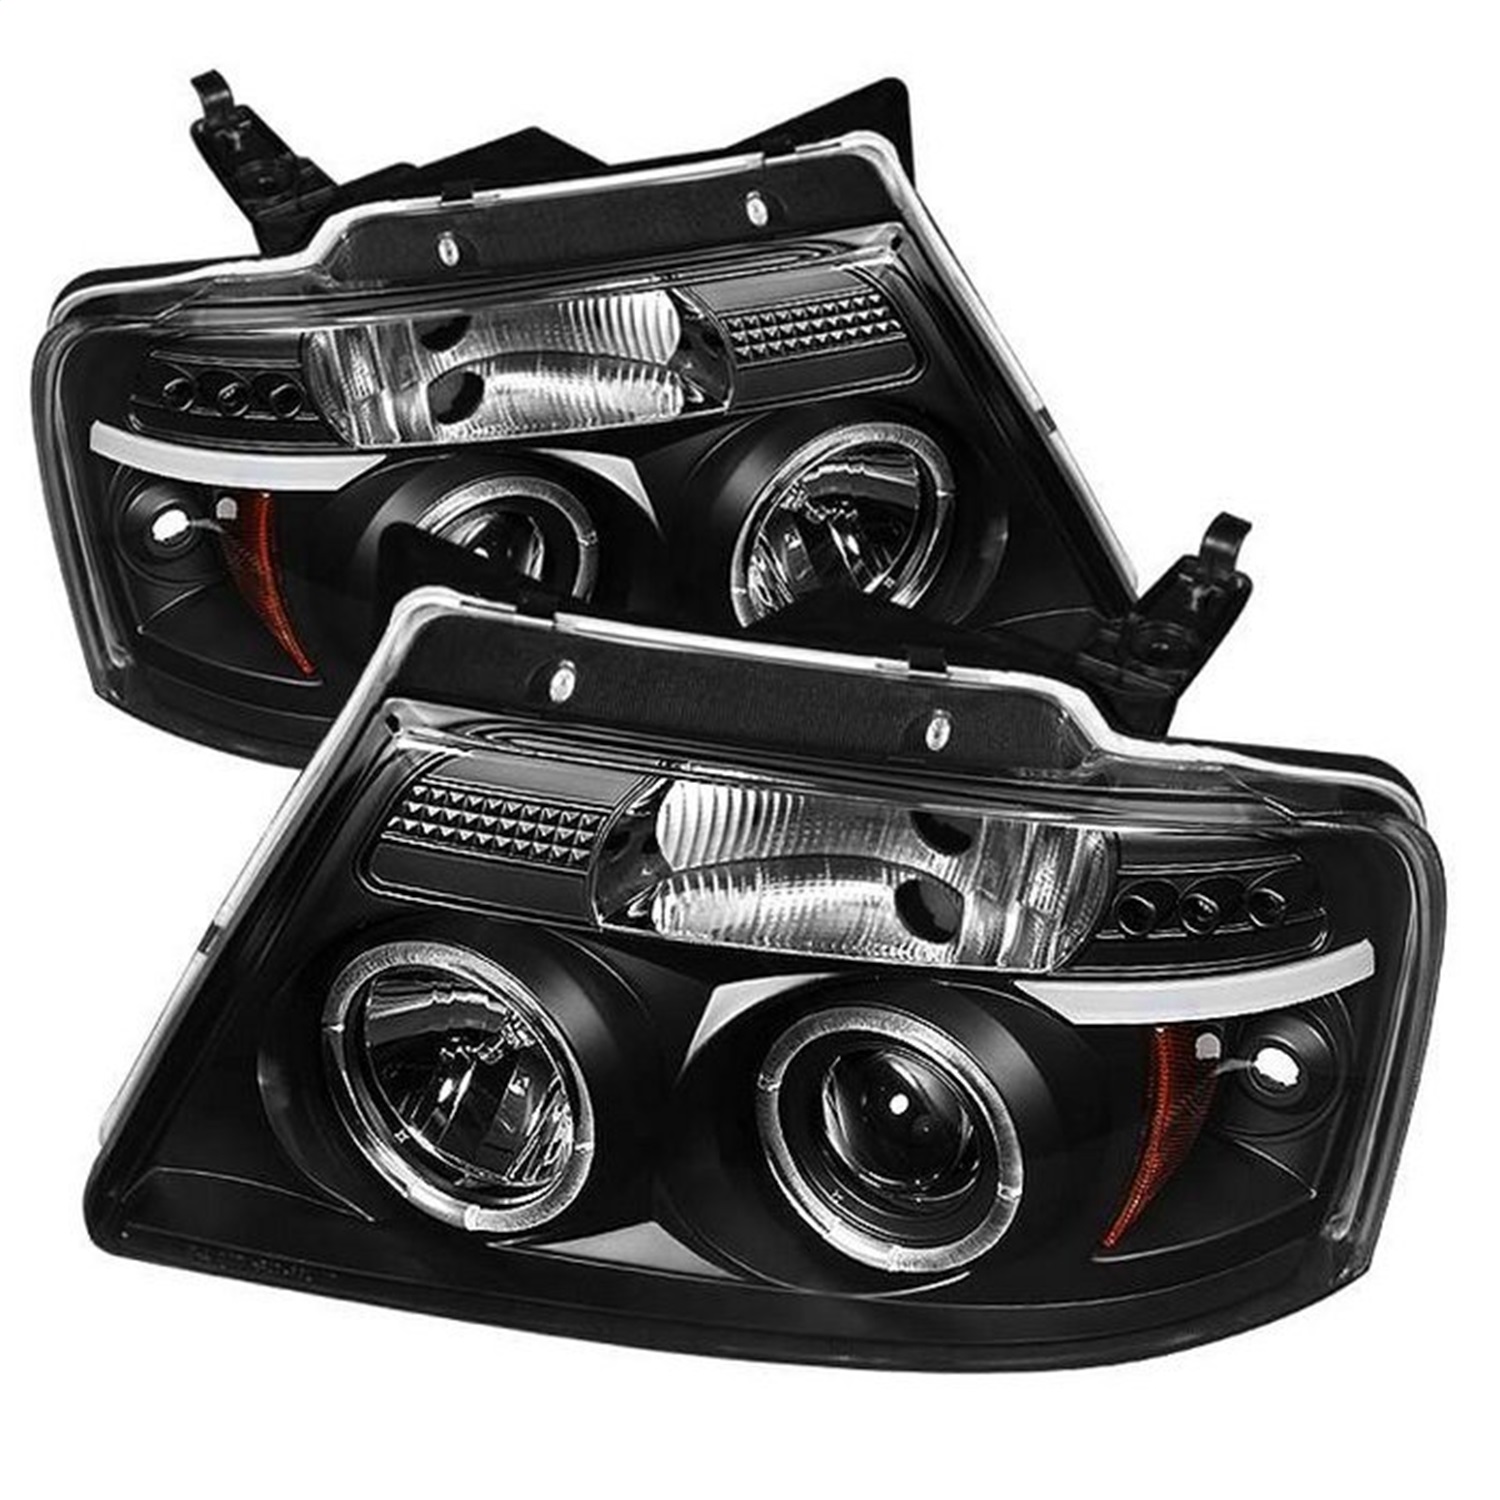 Spyder Auto 5010209 Halo LED Projector Headlights Fits 04-08 F-150